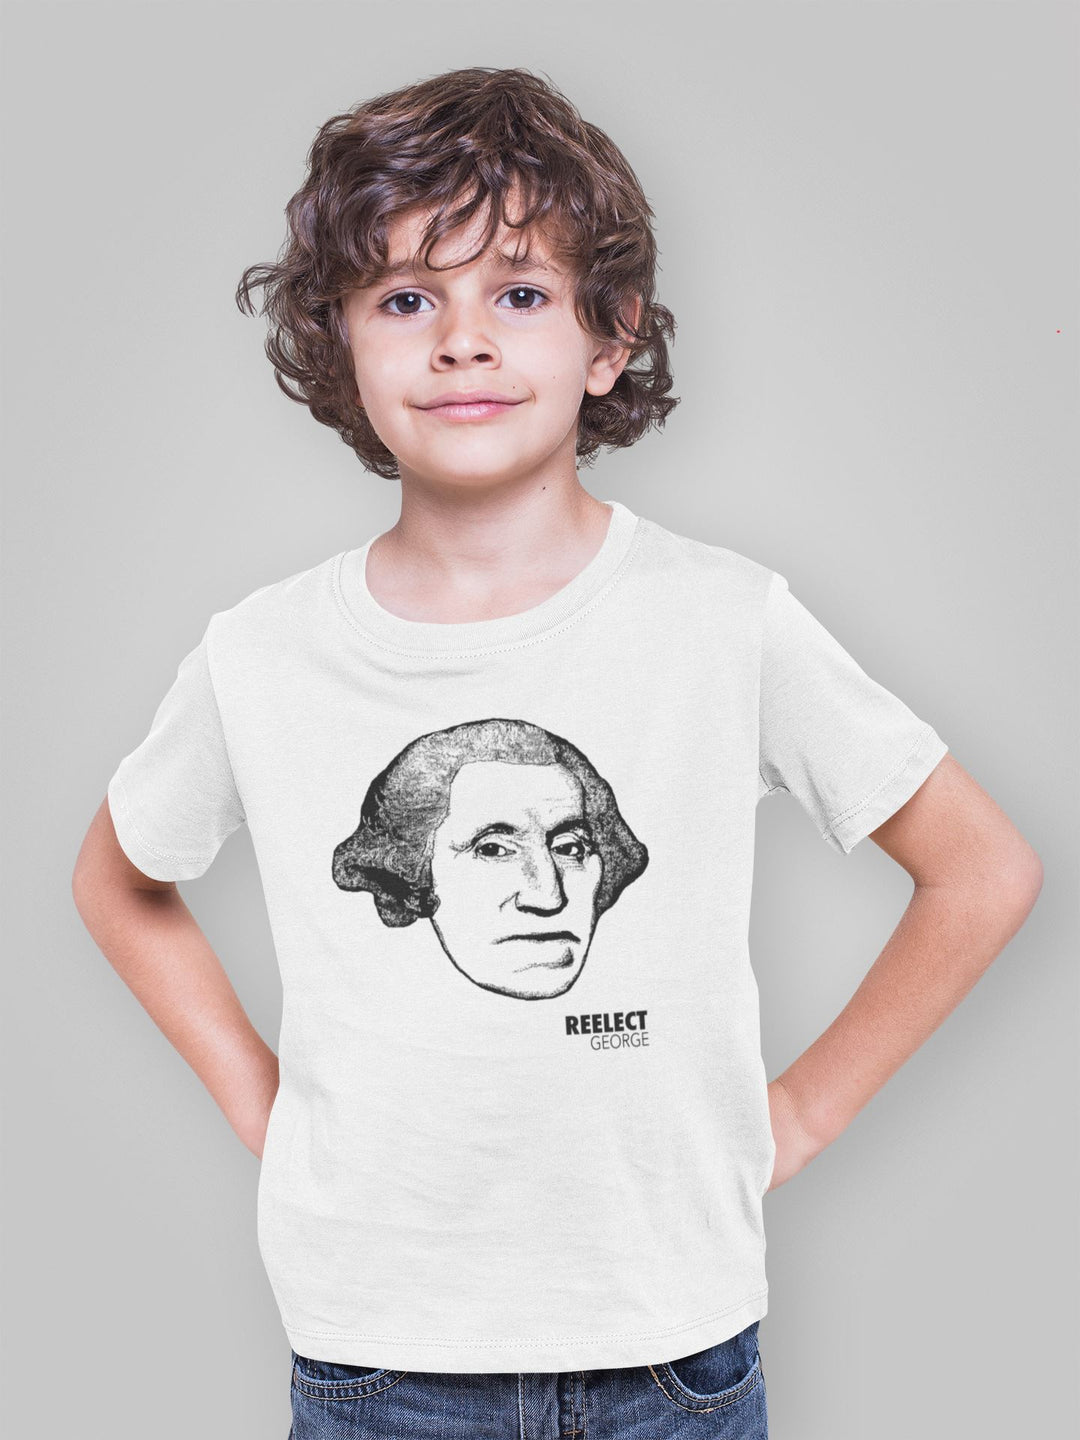 The Original Revolutionary Toddler/Kids Tee Kids Shirt Reelect George 